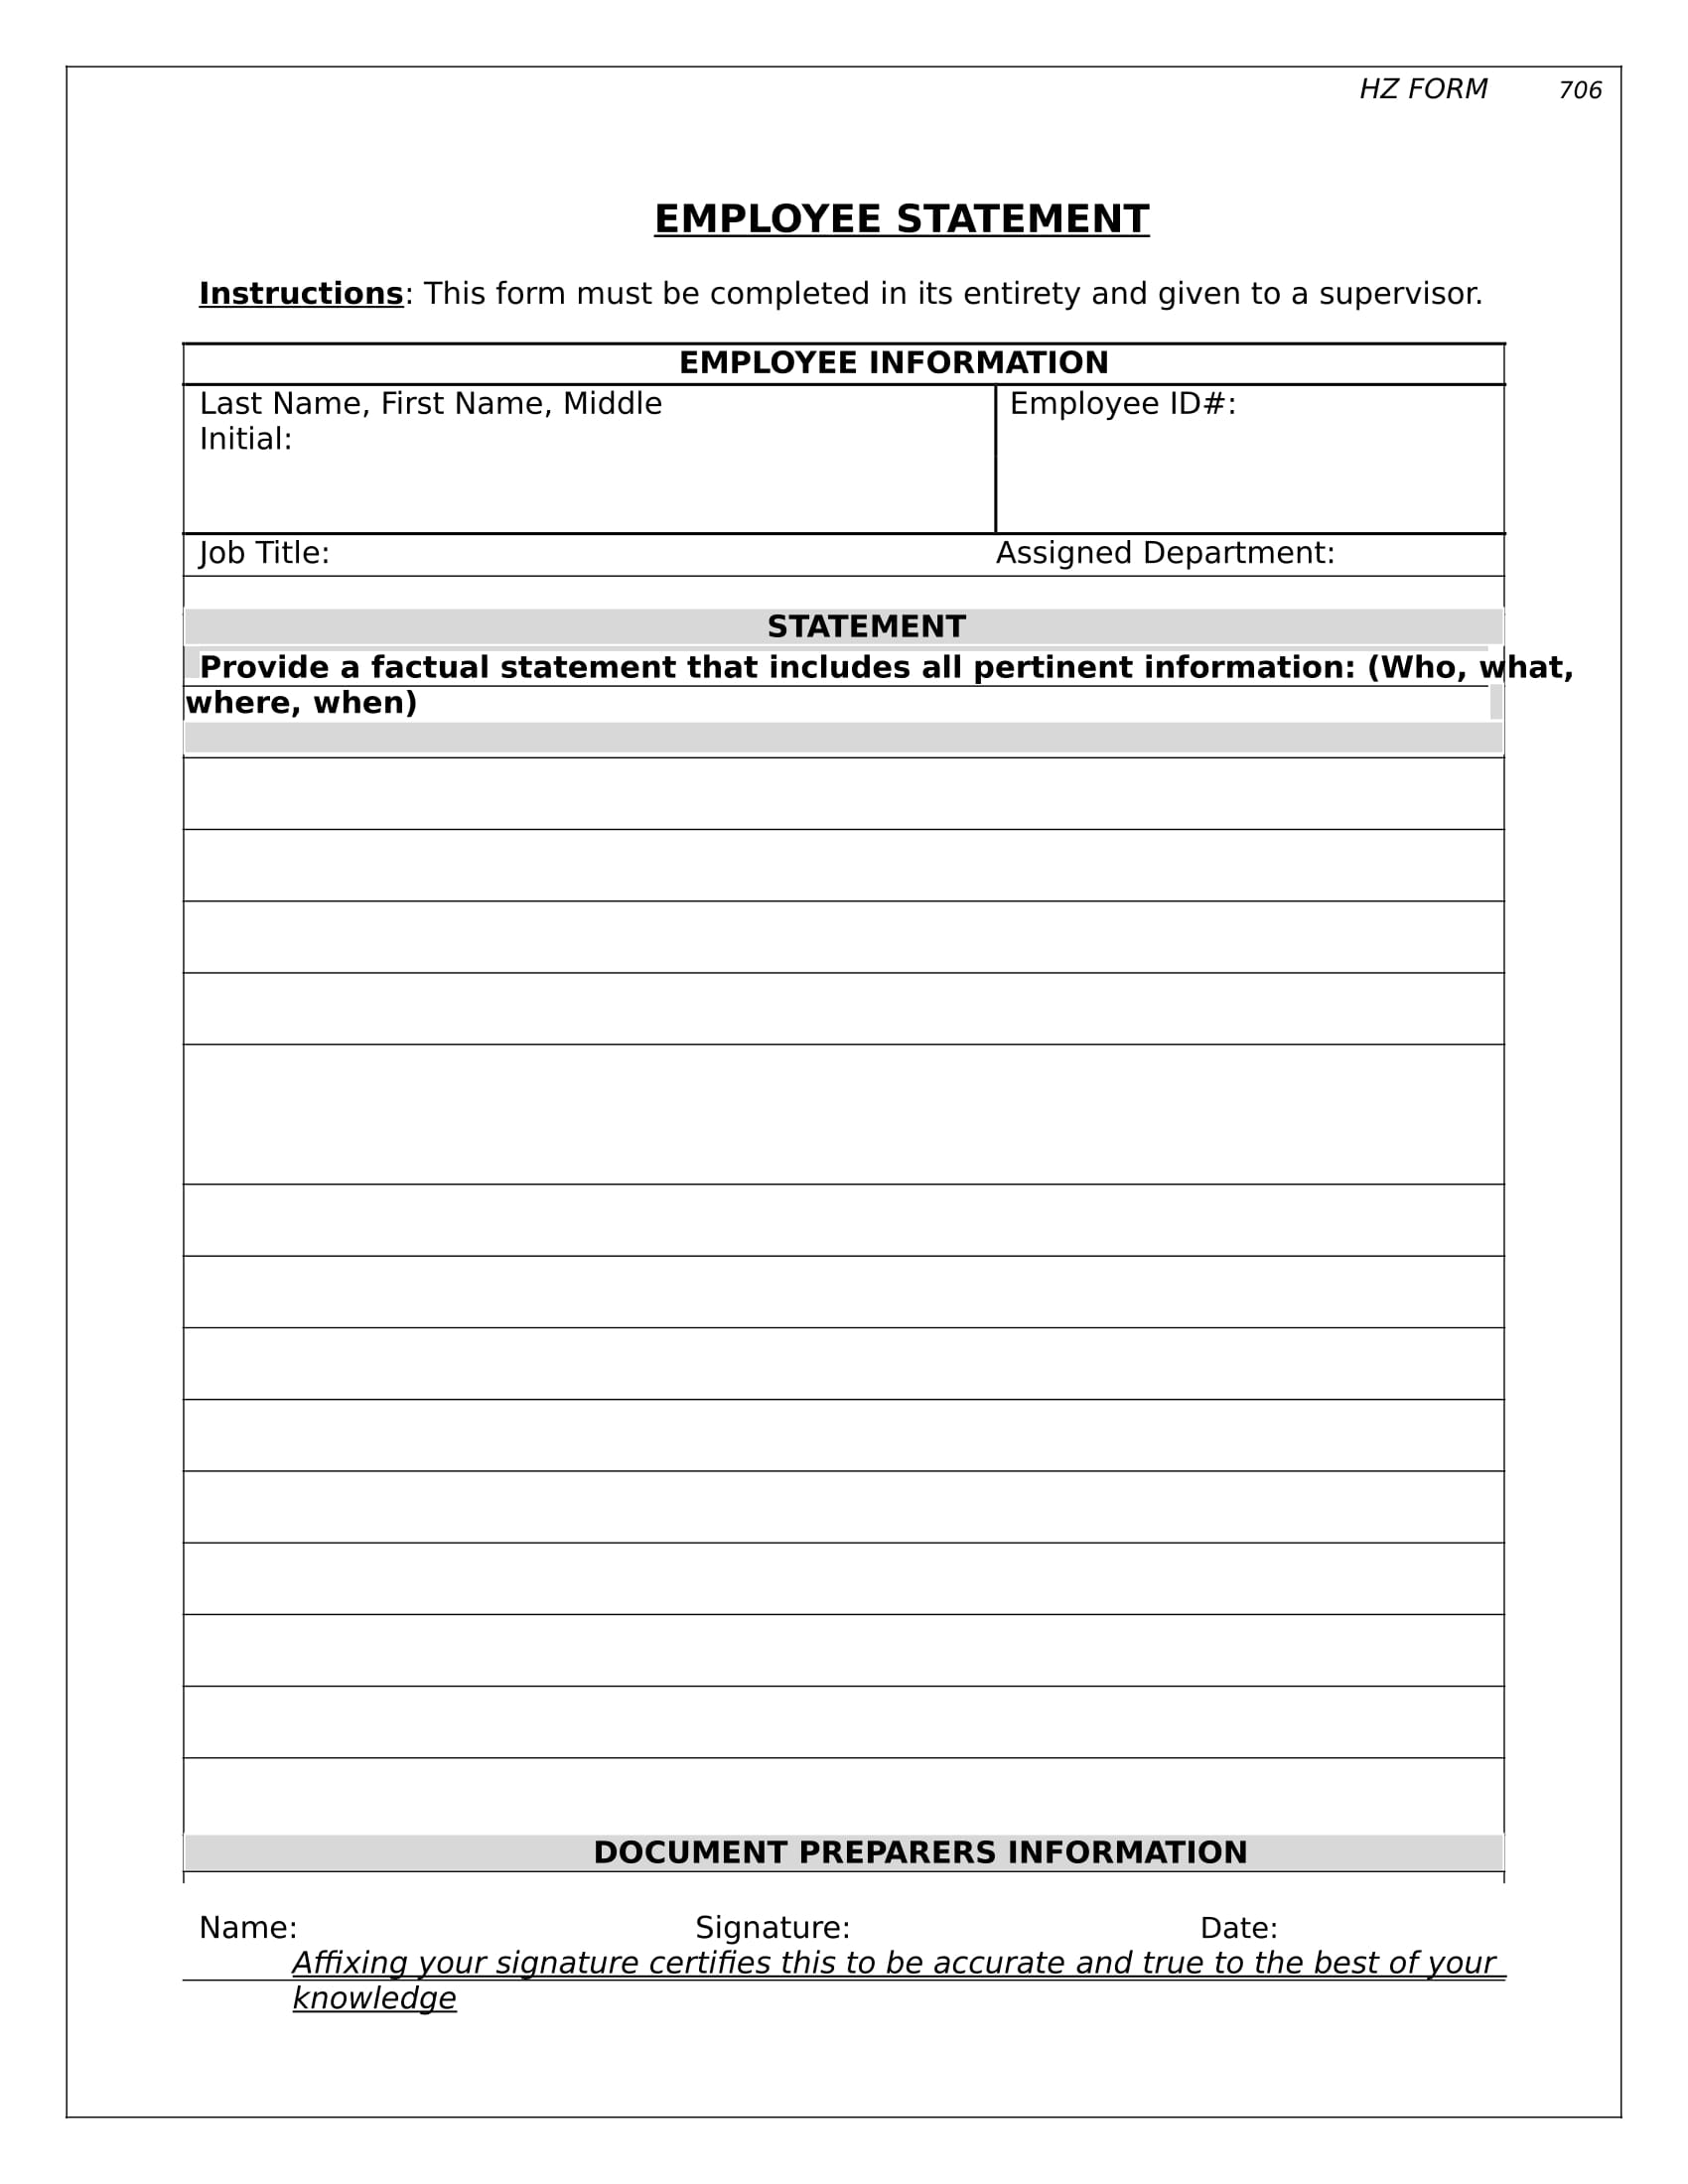 employee statement form sample 1